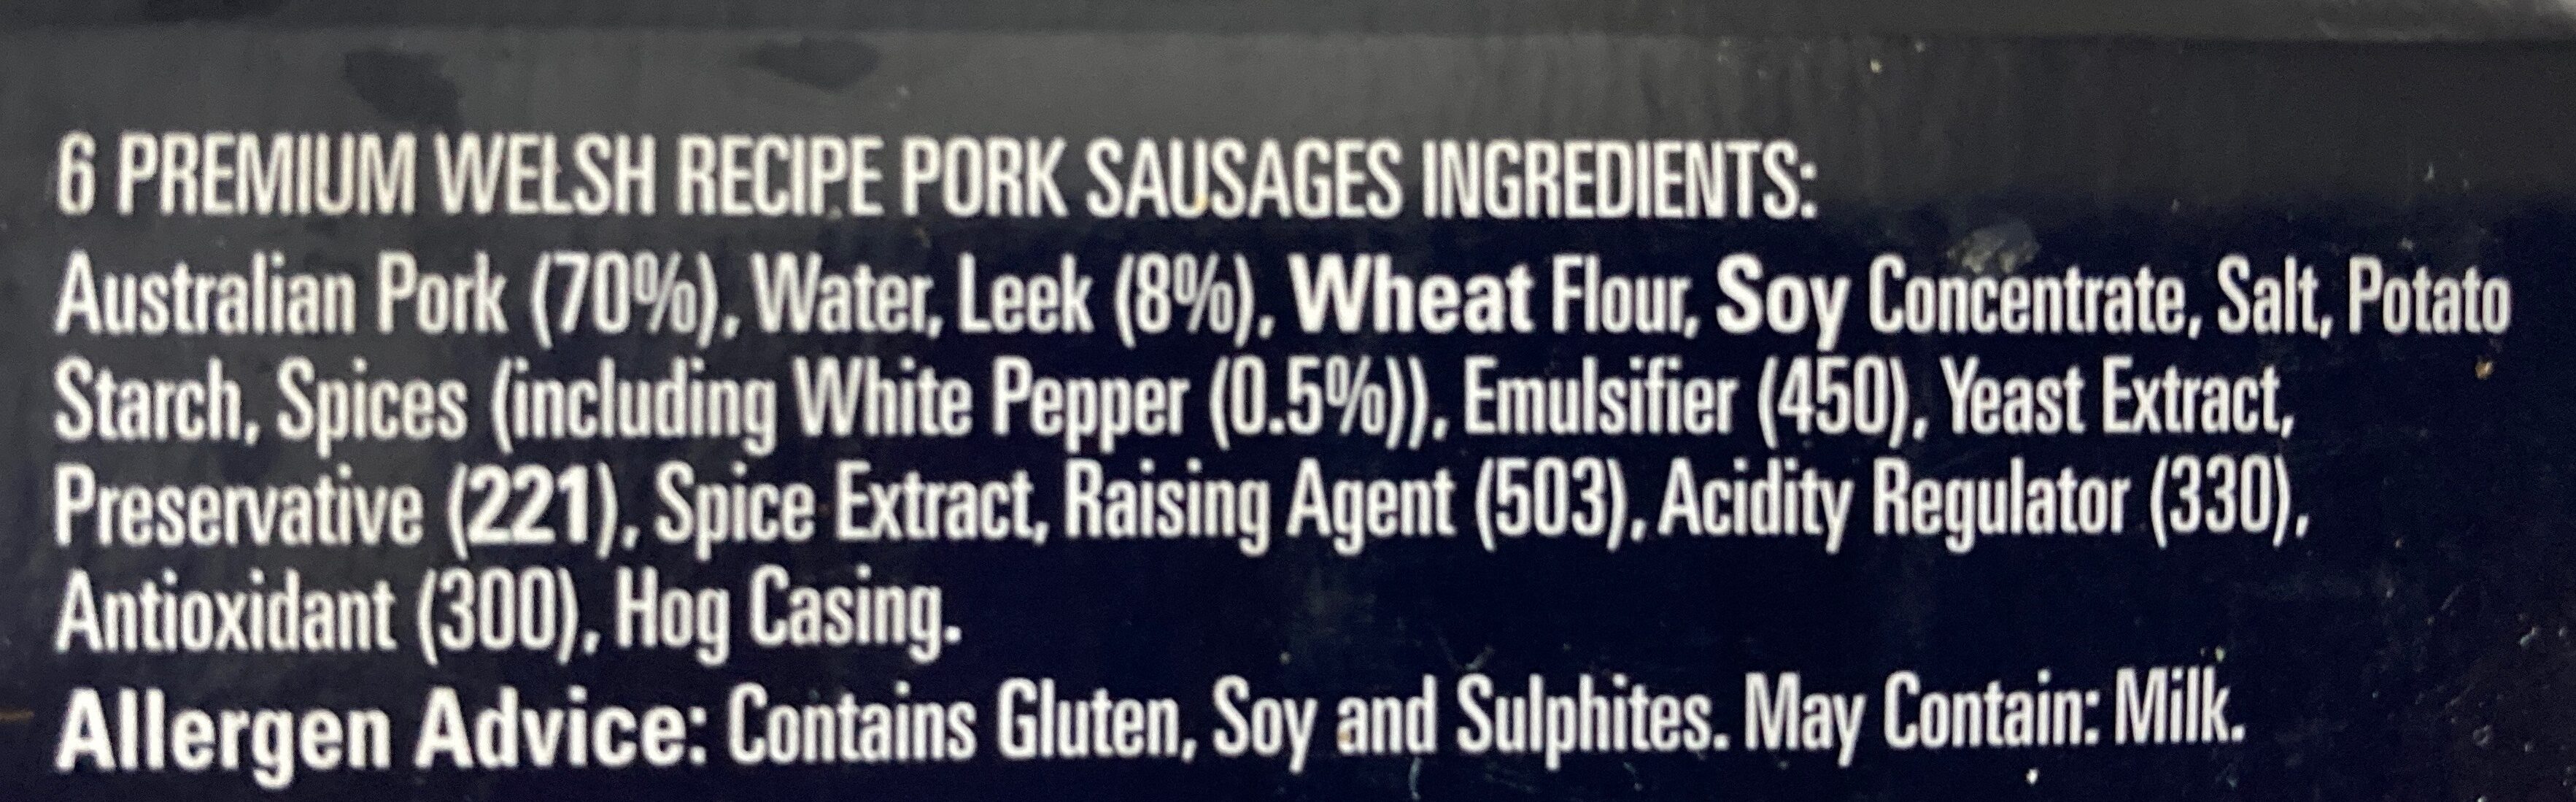 Welsh Recipe Pork Sausages - Ingredients